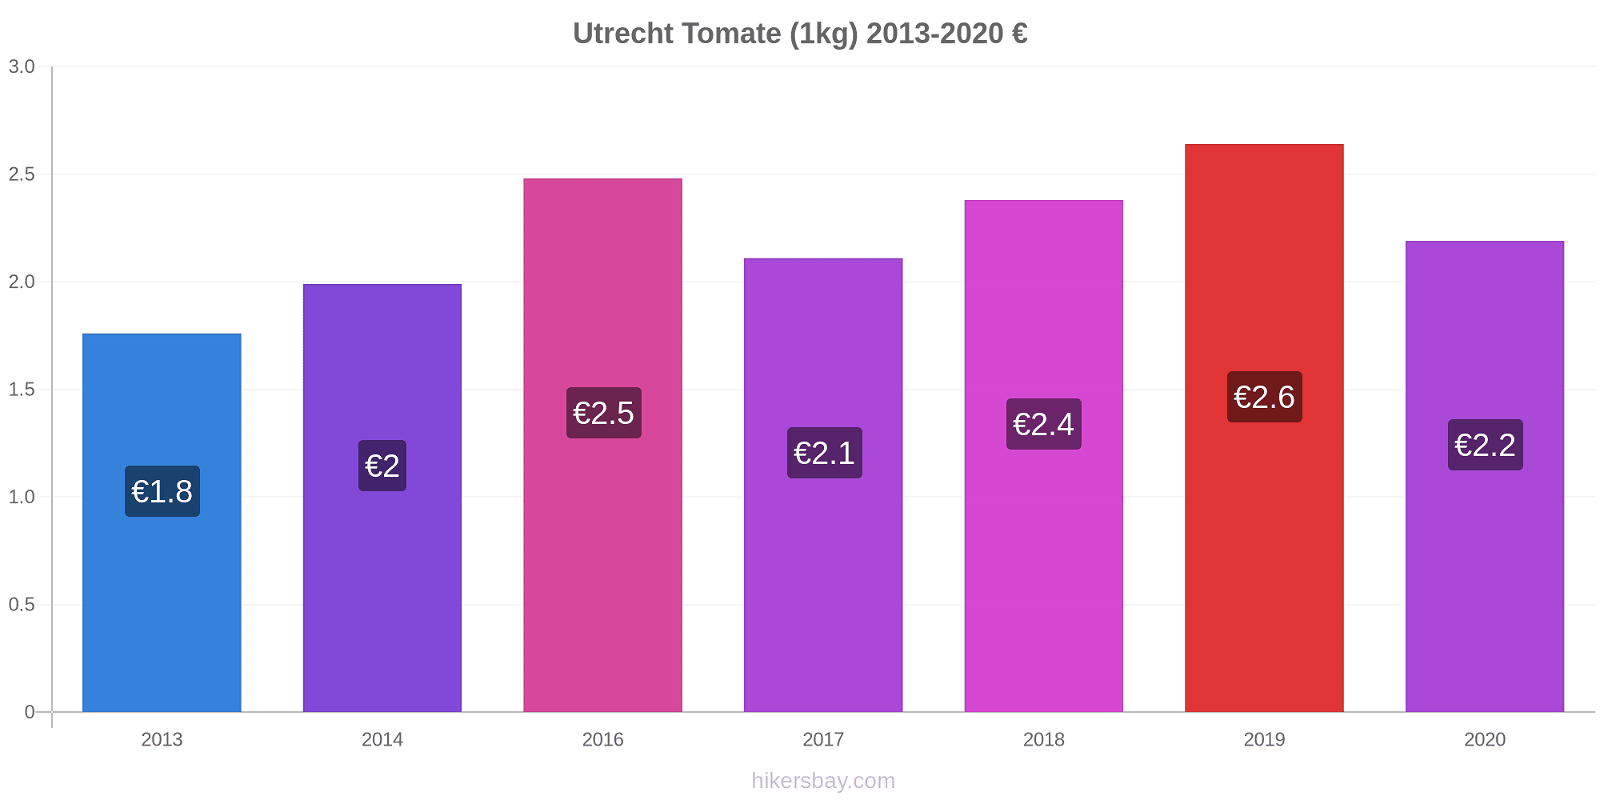 Utrecht Preisänderungen Tomaten (1kg) hikersbay.com